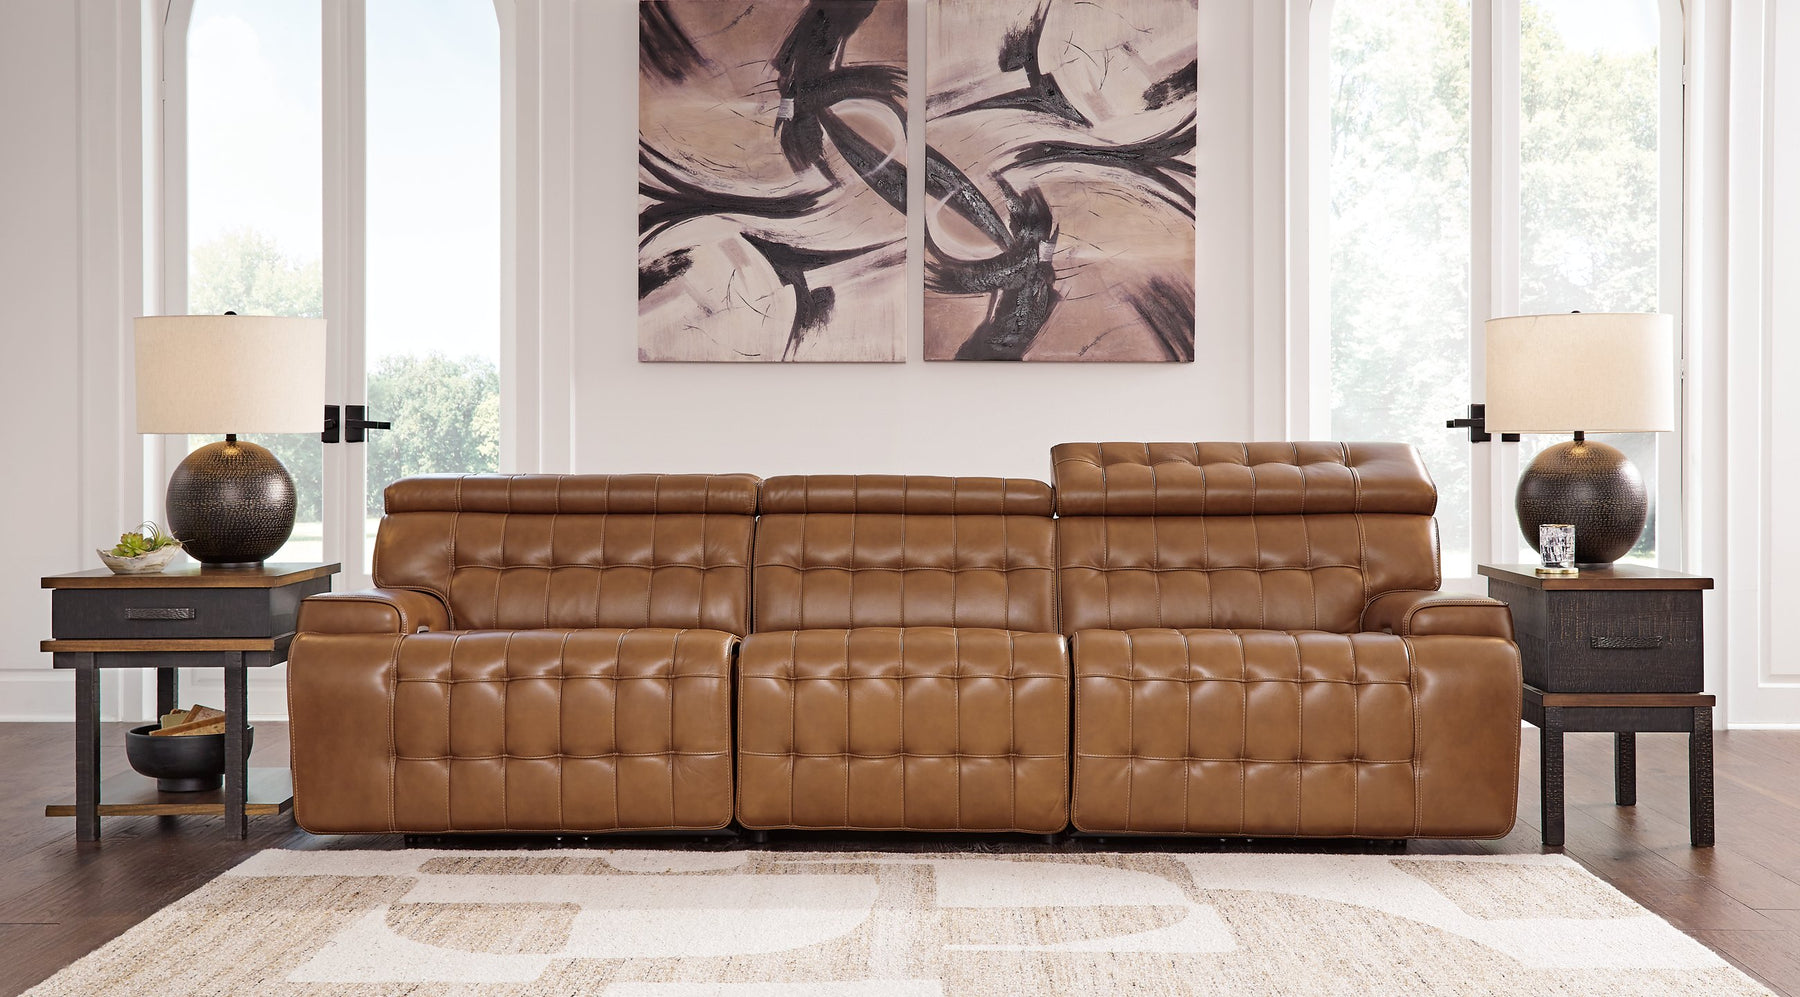 Temmpton Living Room Set - Half Price Furniture